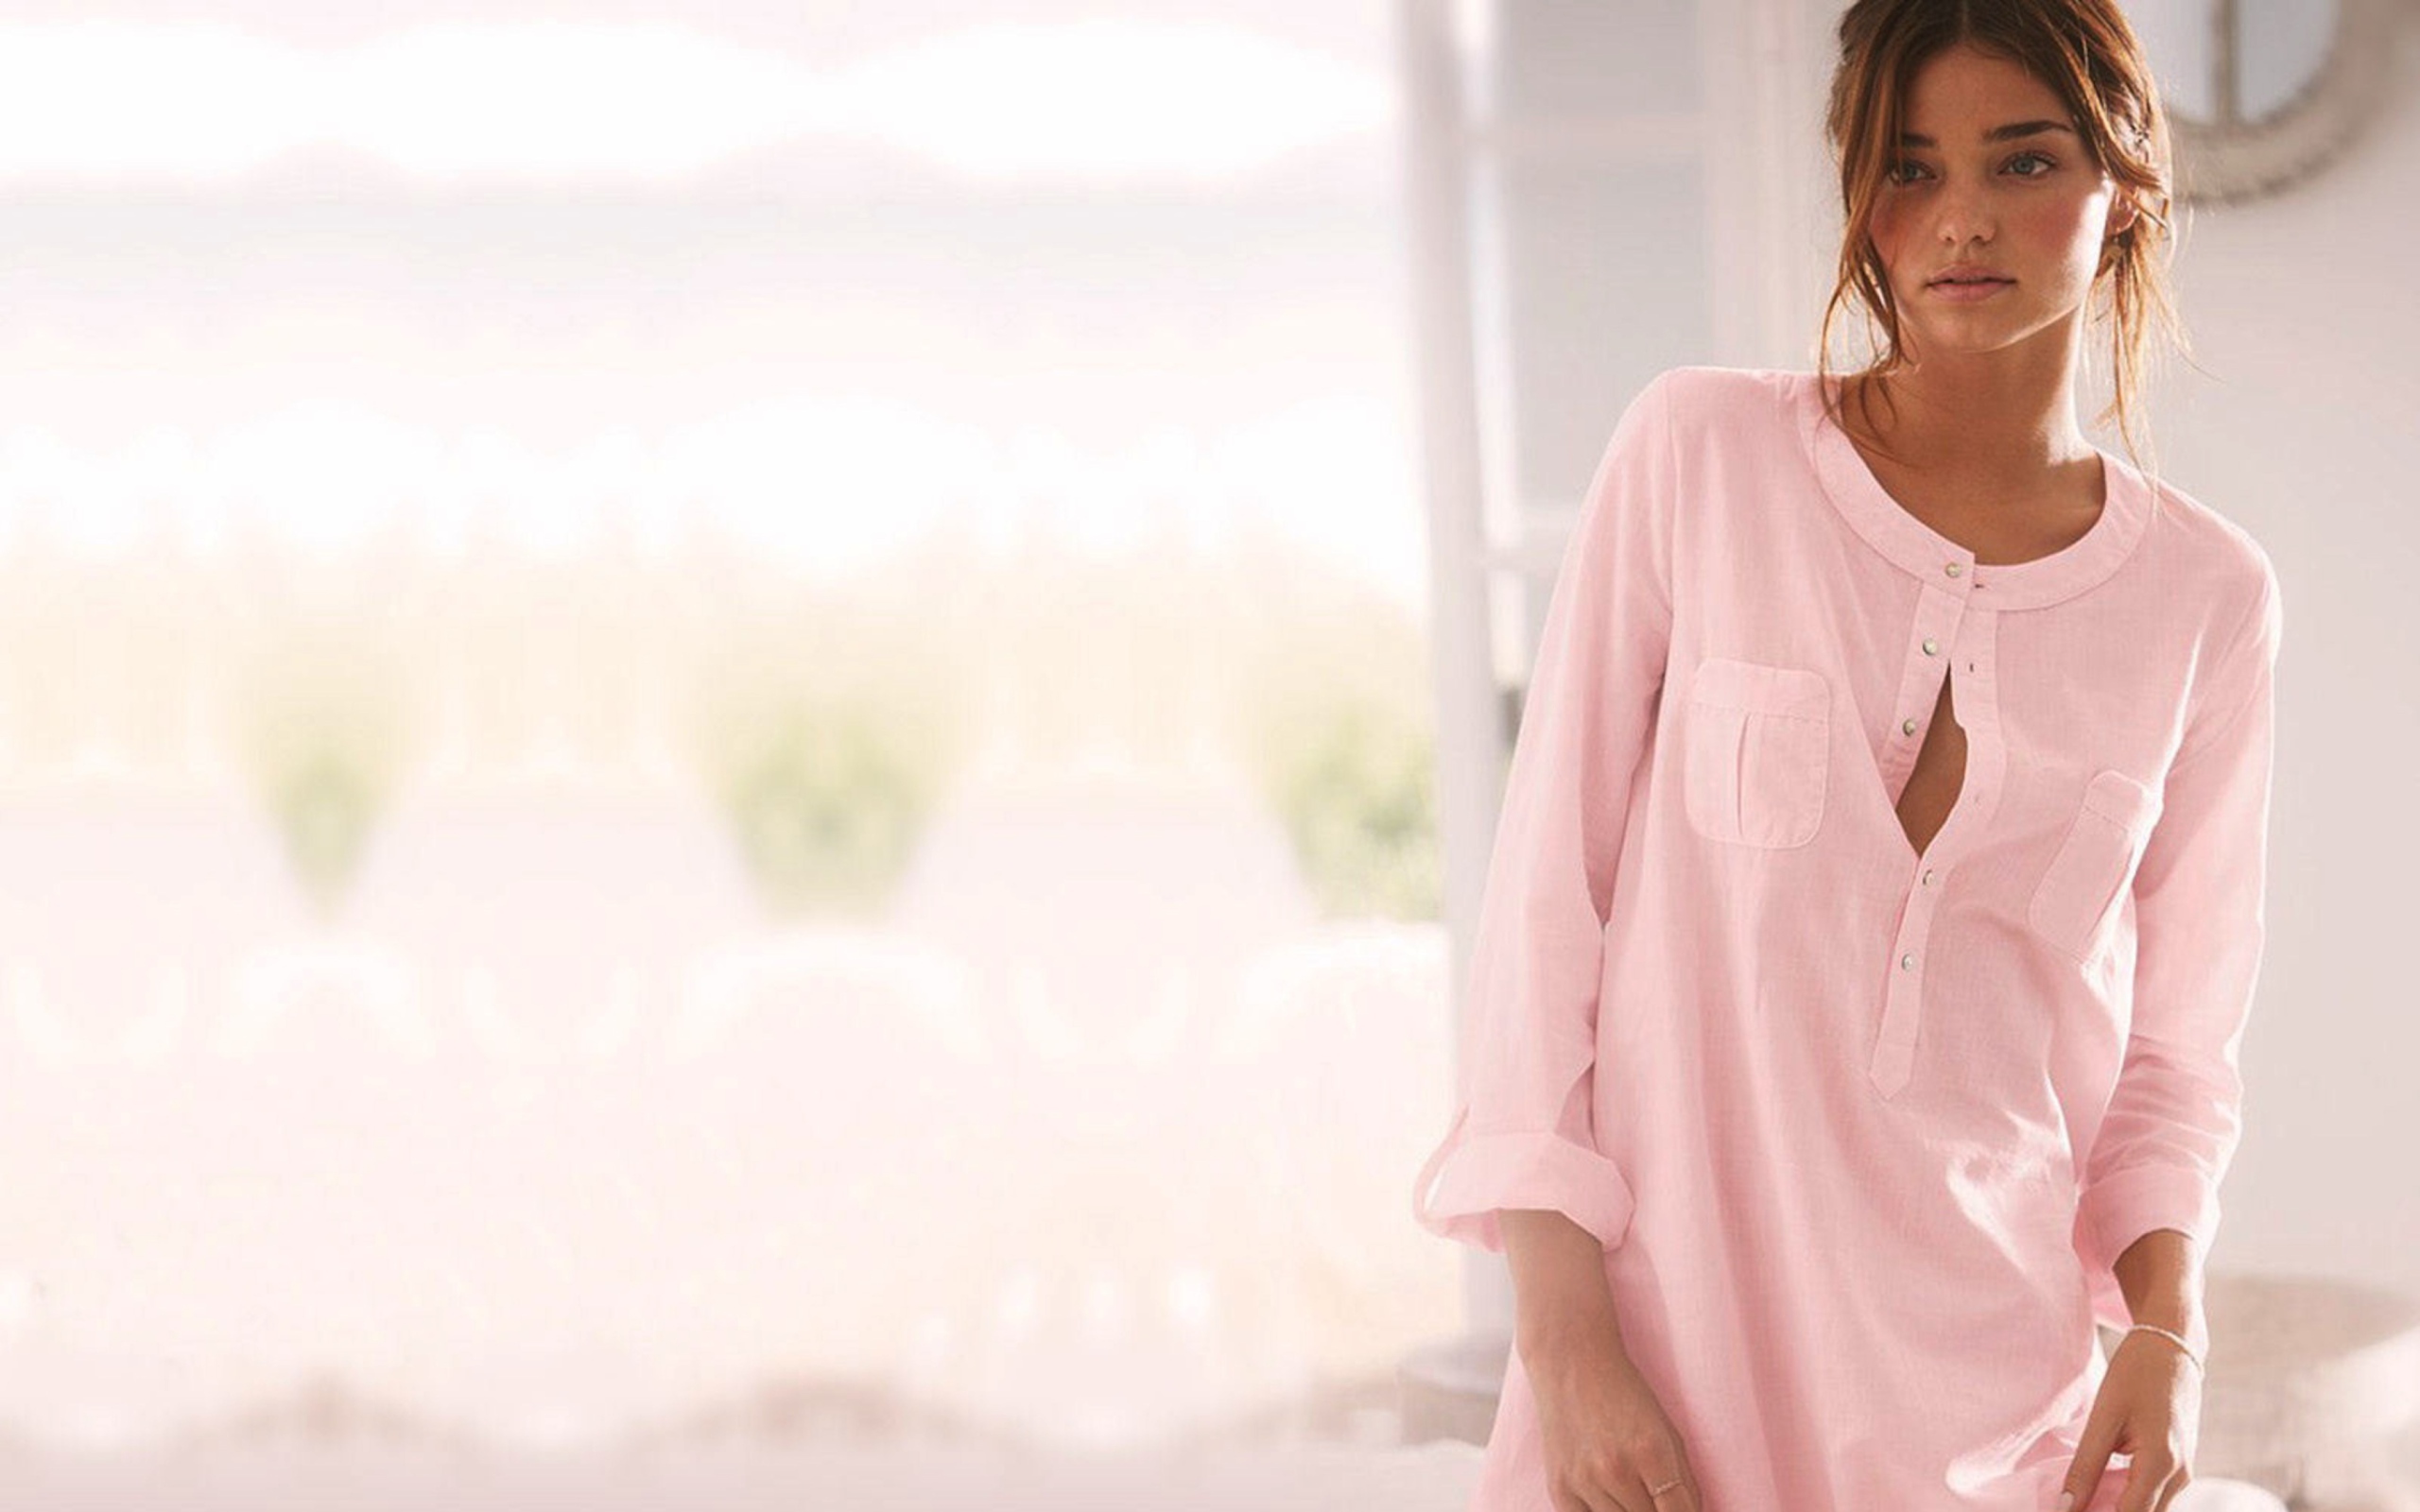 Miranda Kerr In Pink Shirt wallpaper 2560x1600